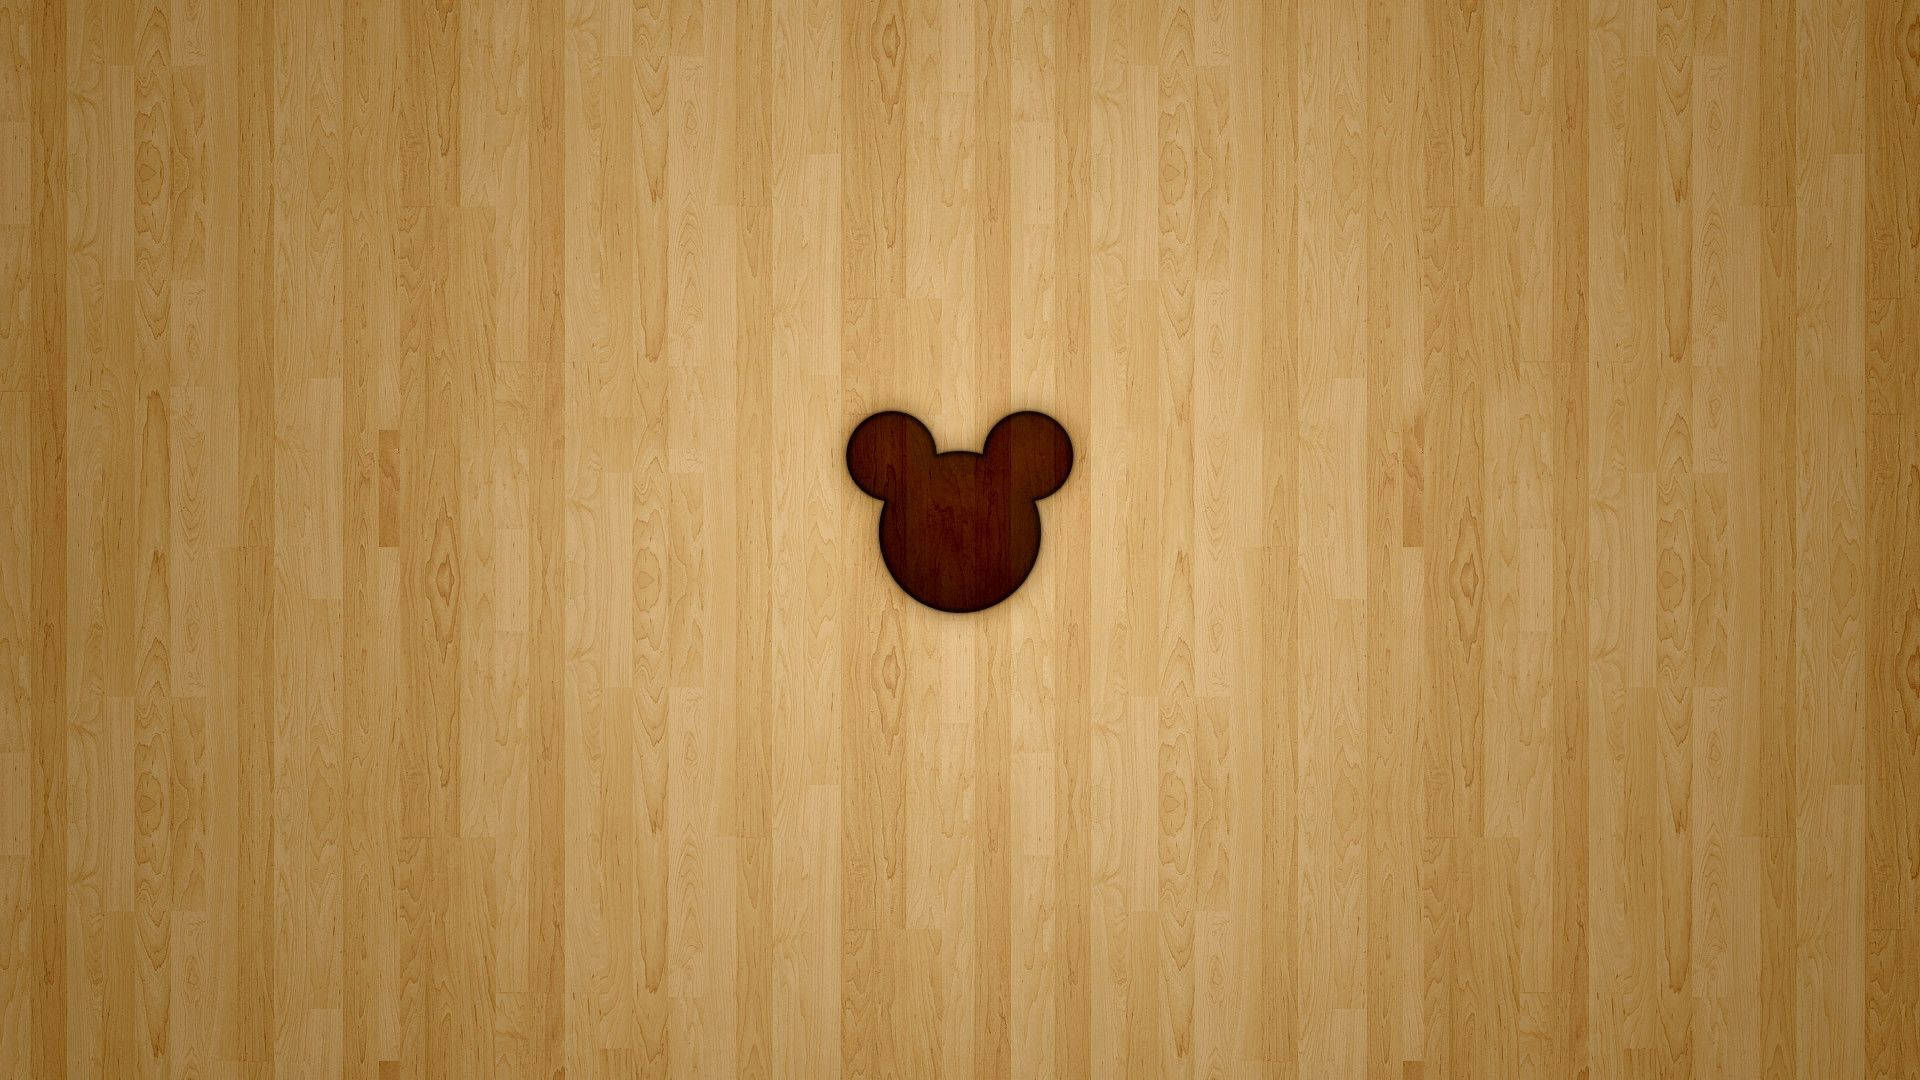 Disney 1920x1080 Hd Mickey Mouse Logo On Wood Wallpaper